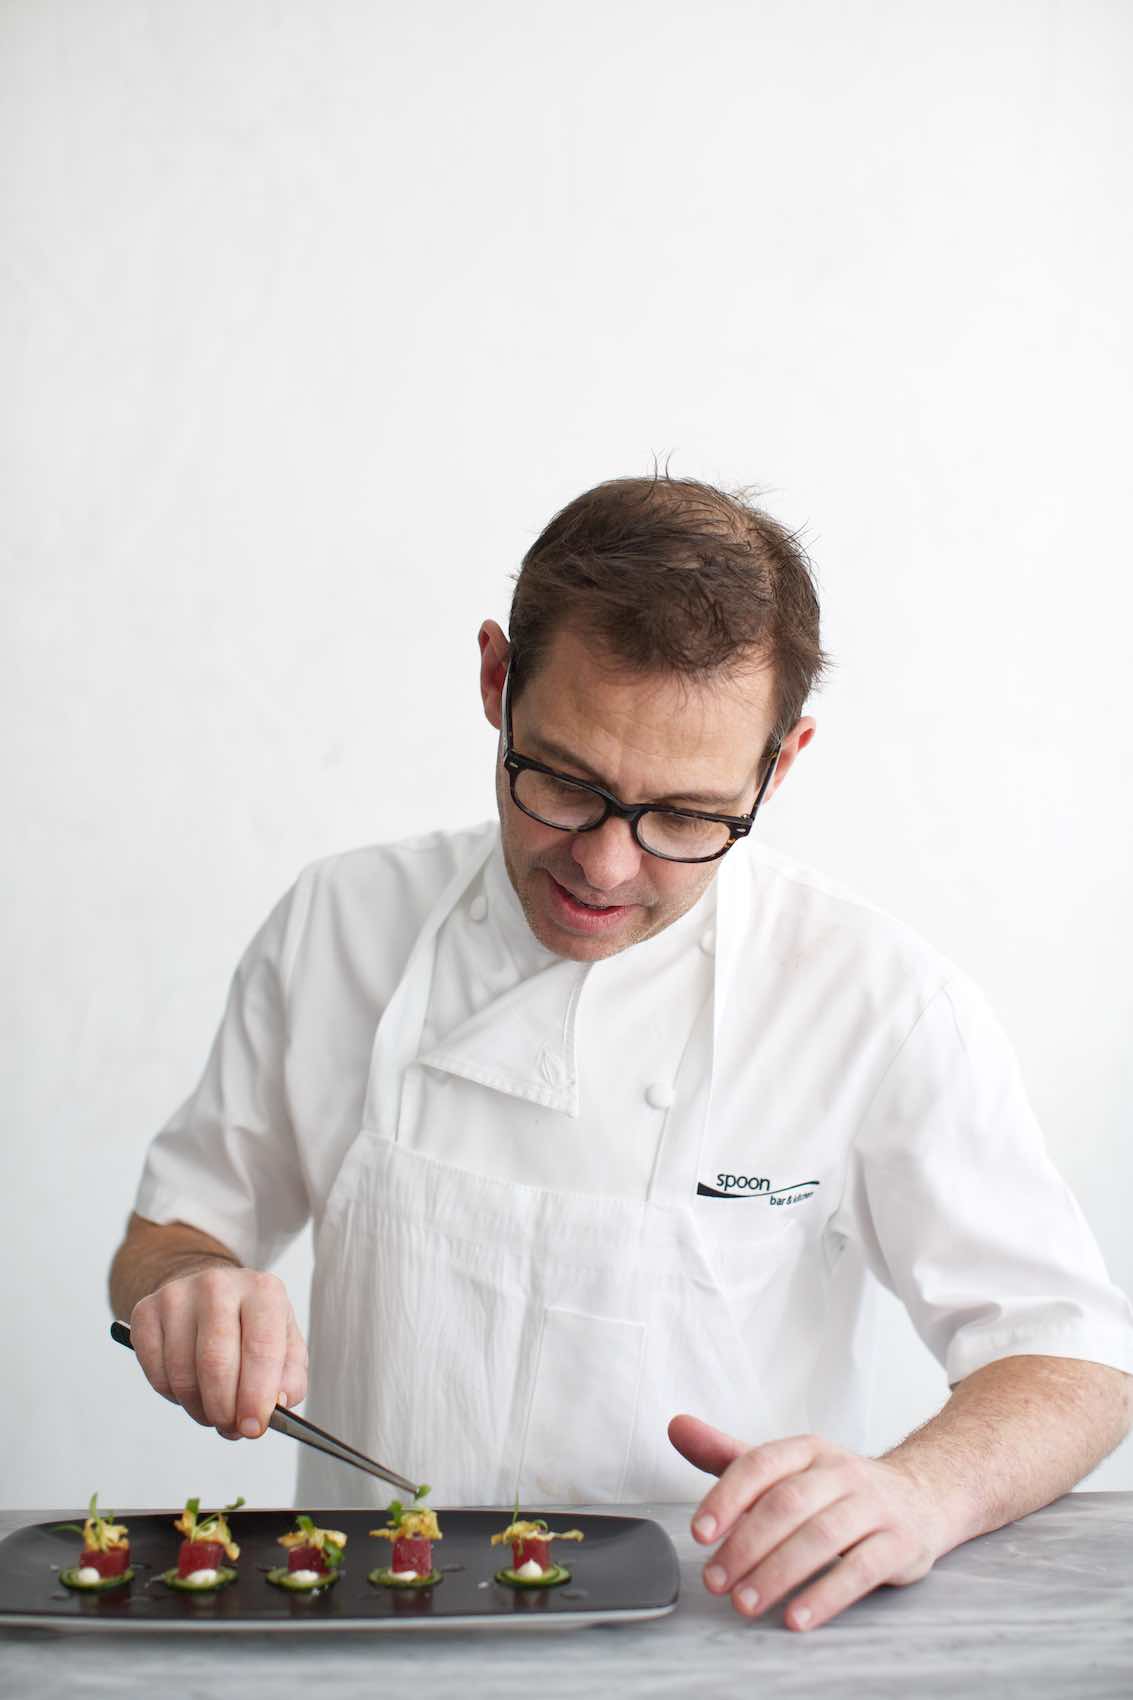 Jody Horton Photography - Chef in uniform plating a dish.